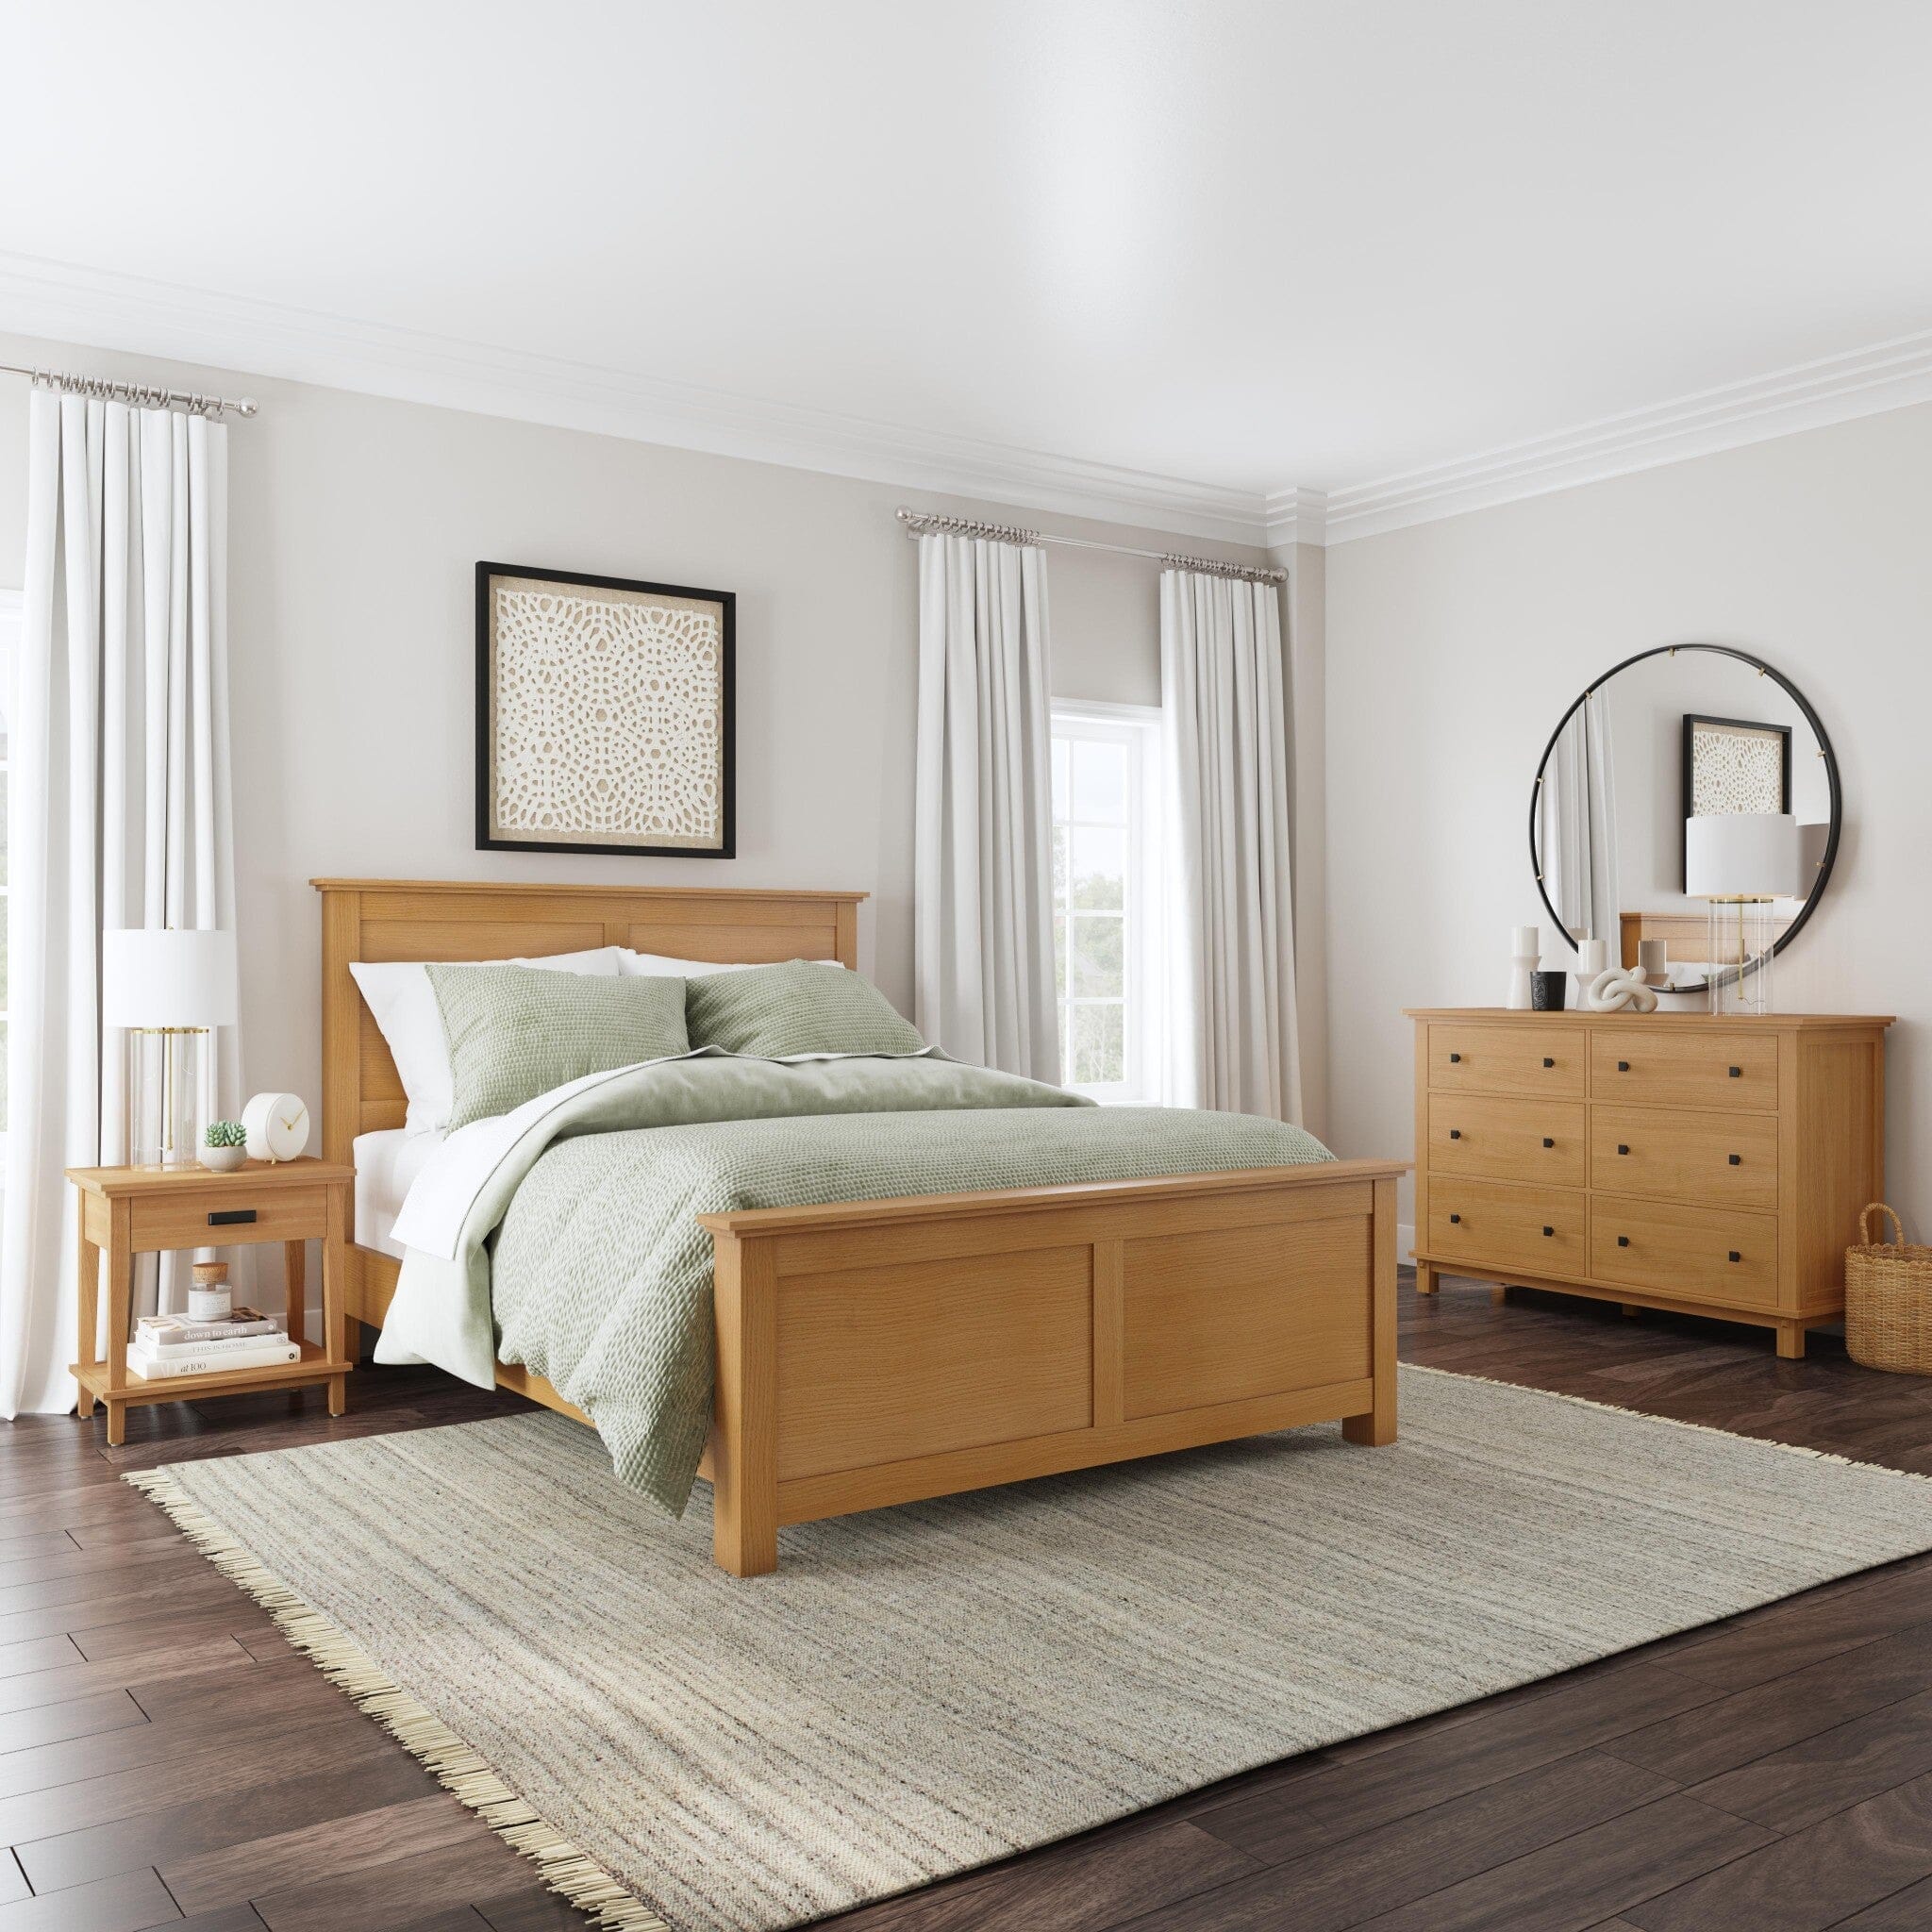 Traditional Queen Bed, Nightstand and Dresser By Oak Park Queen Bed Oak Park